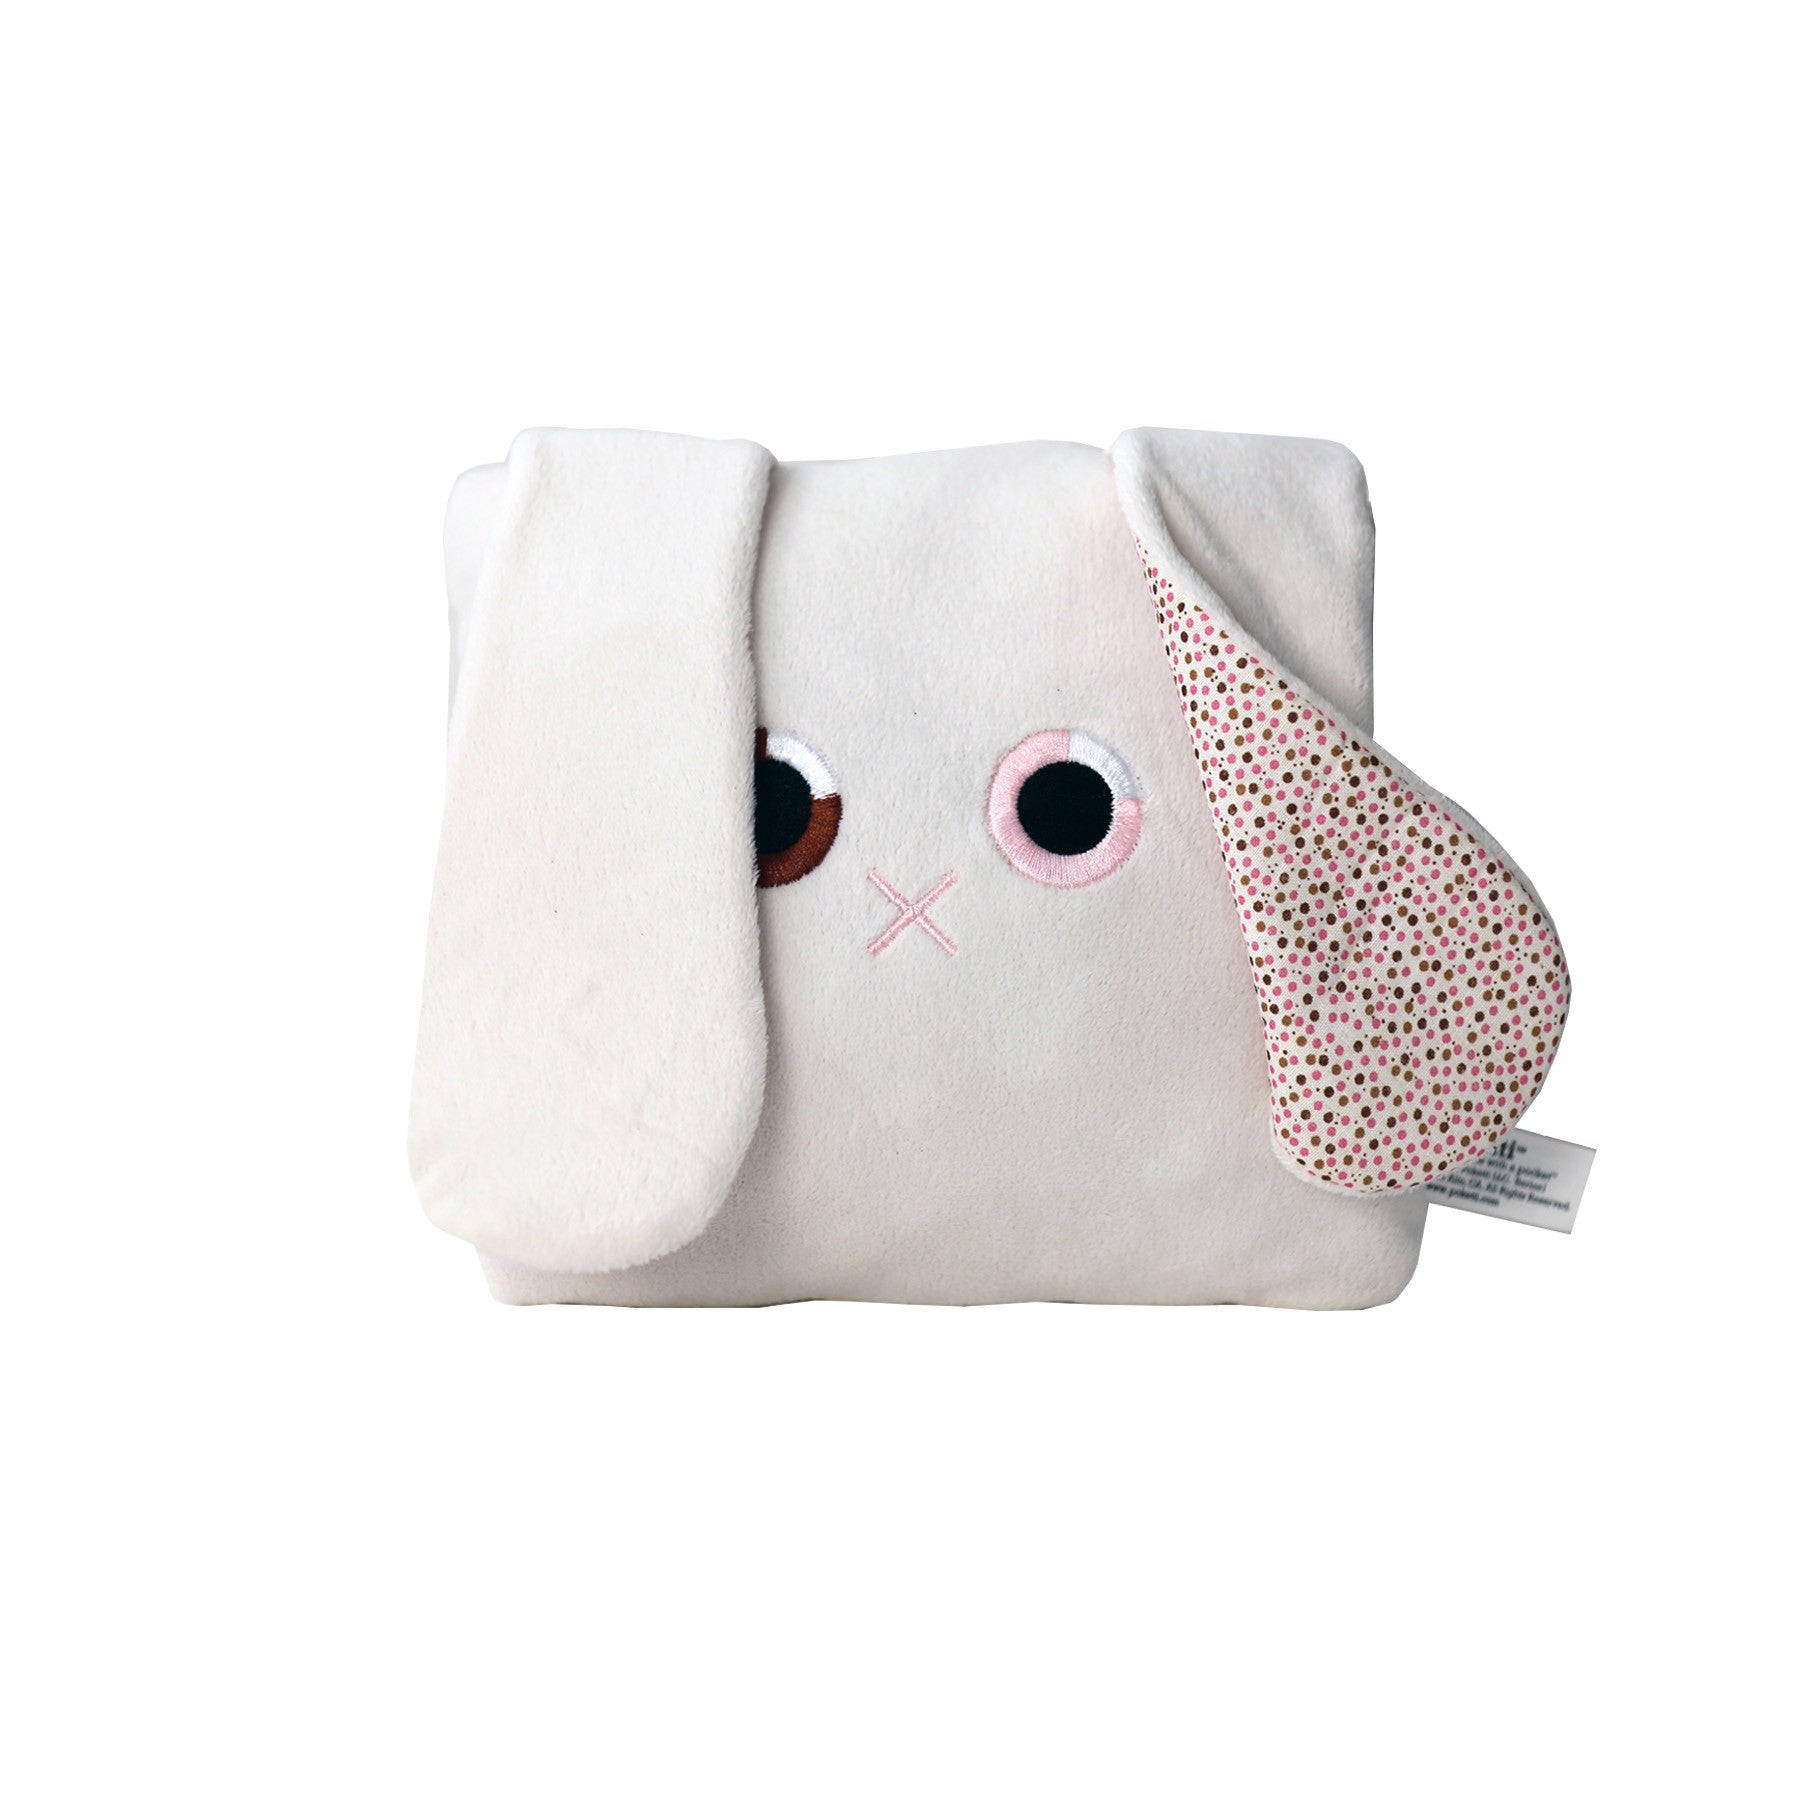 Poketti Bunny Rabbit Plush Pillow with a Pocket - Front